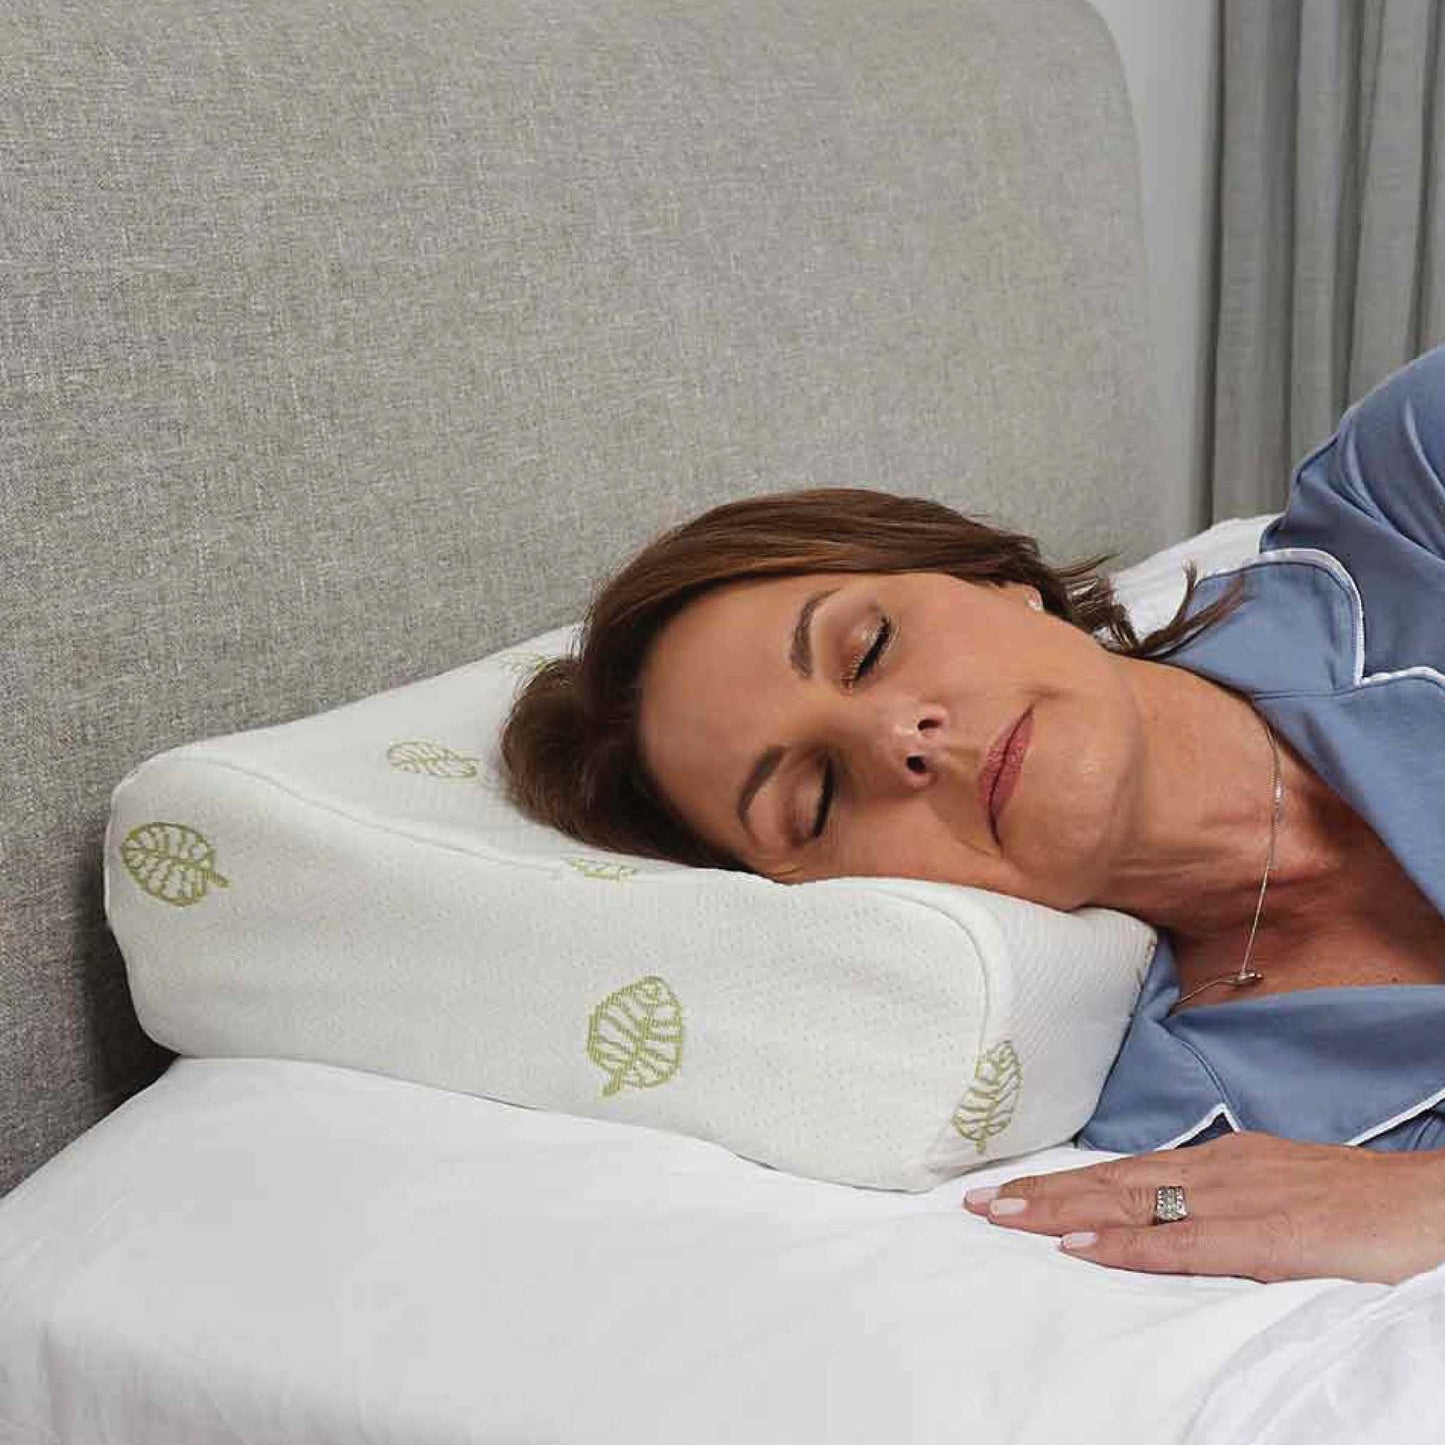 Natural Contoured & Adjustable Latex Pillow